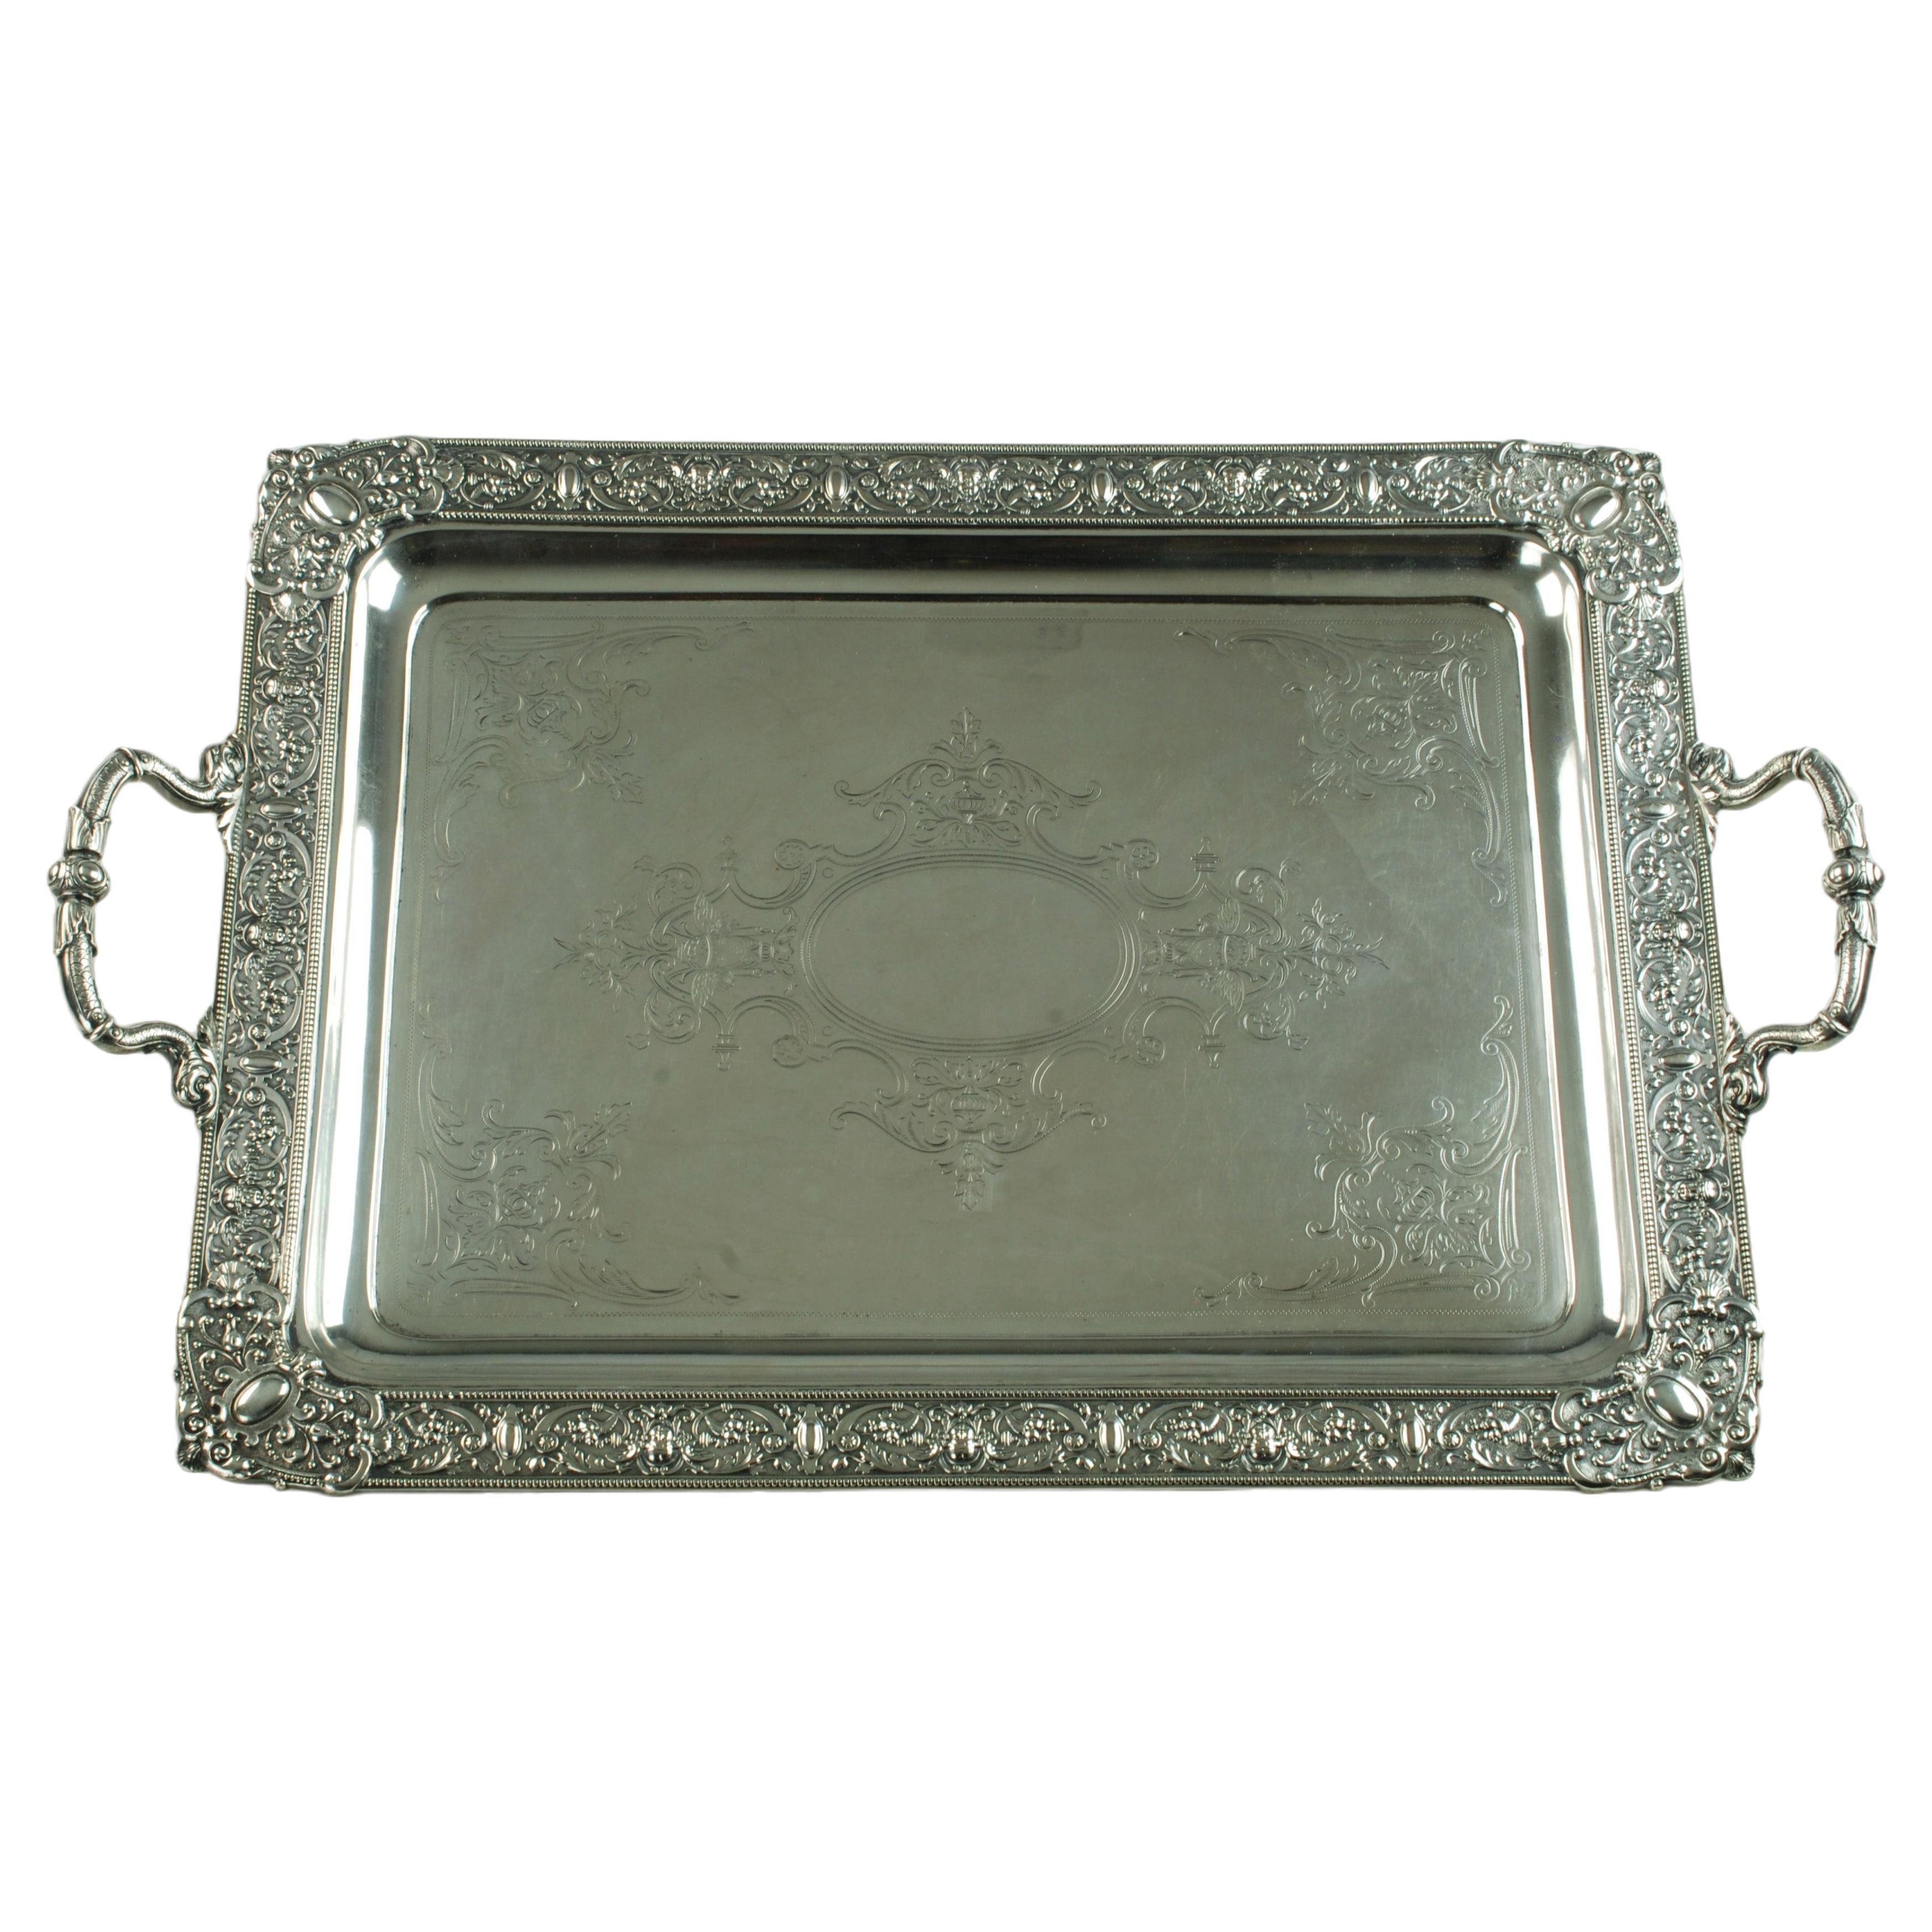 Large Ornate Sterling Silver Rectangular Butler Serving Tray Renaissance Revival